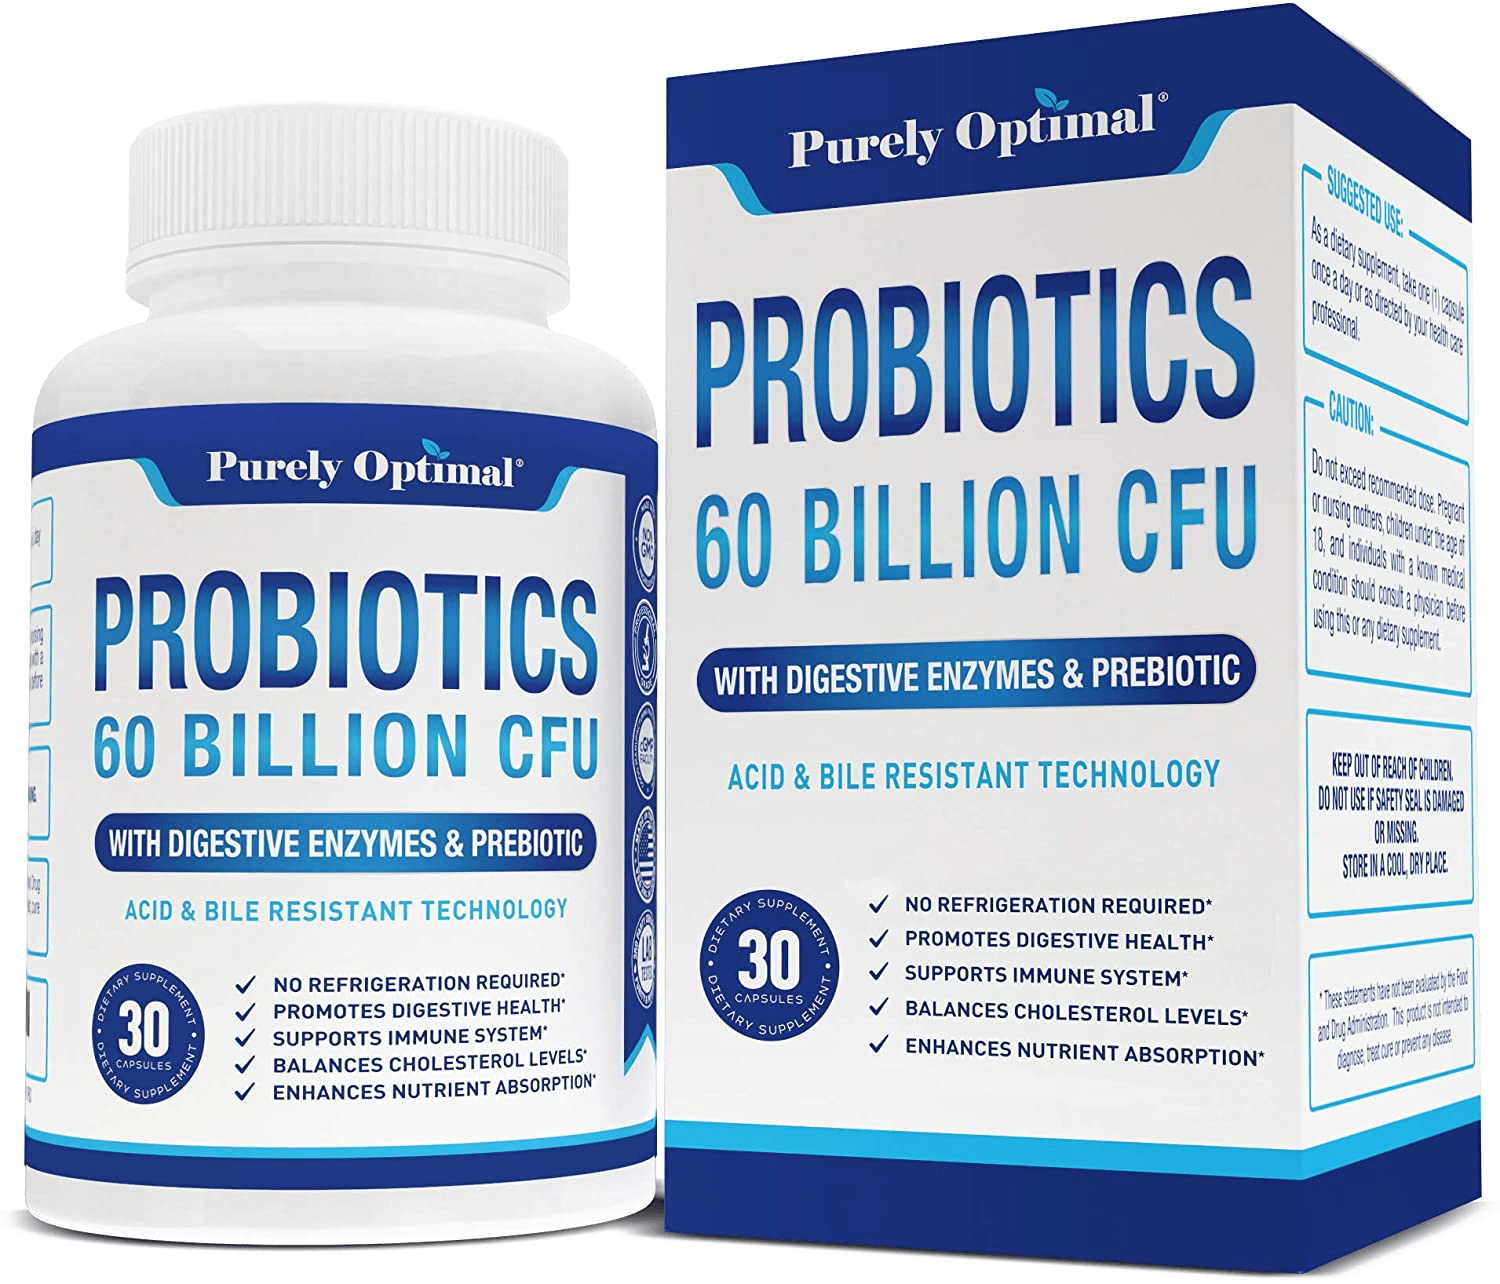 Purely Optimal Probiotics